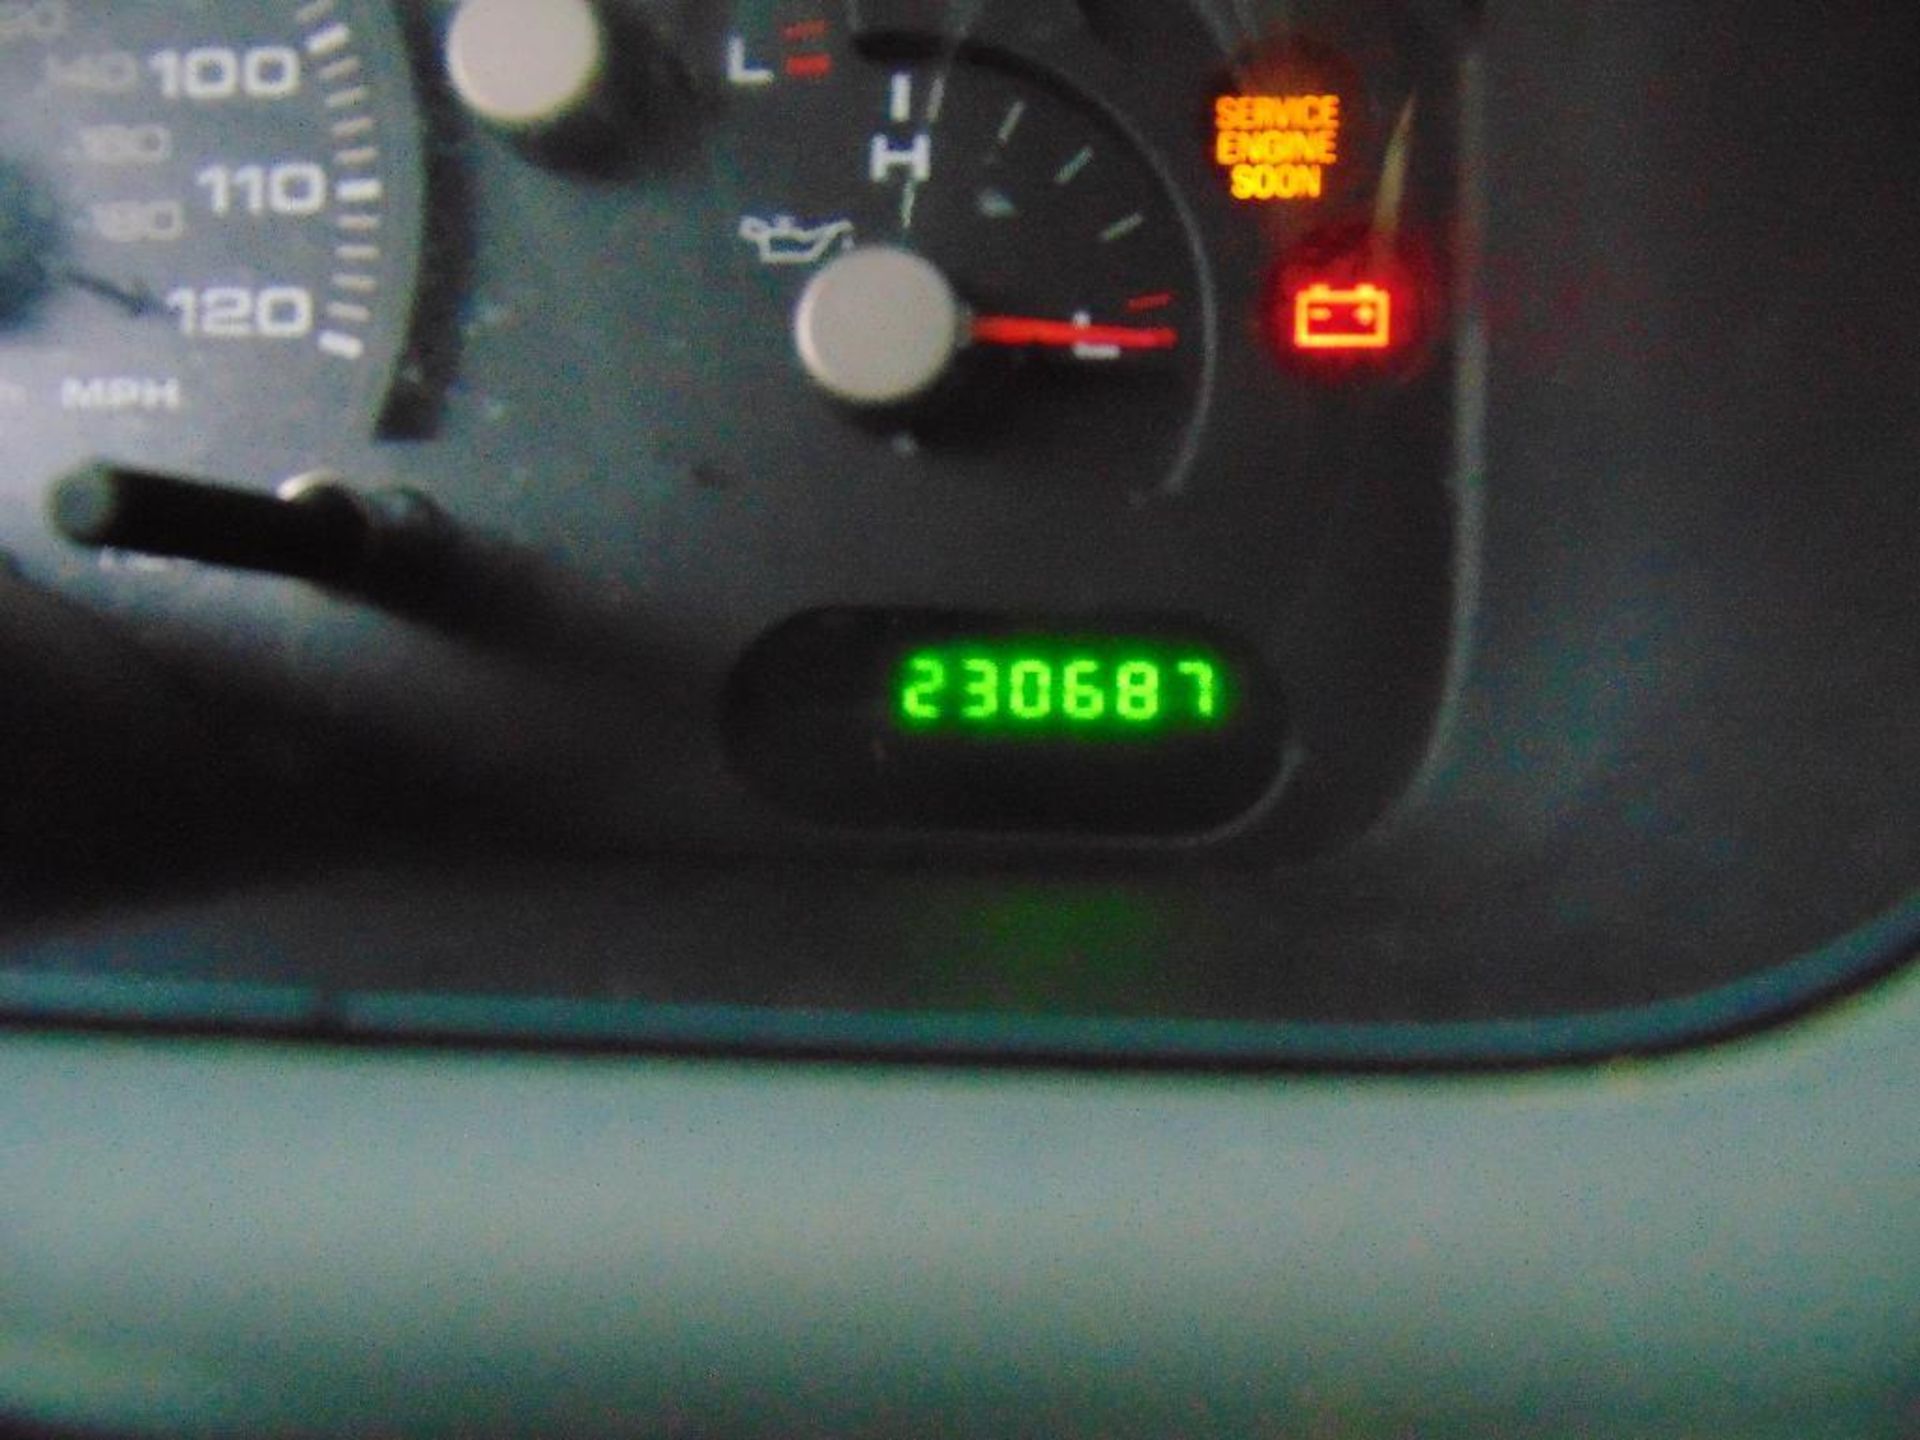 2003 Ford Explorer SUV, s/n 1fmzu62k03zb43085, v6 eng, auto trans, od reads 230687 miles - Image 10 of 10